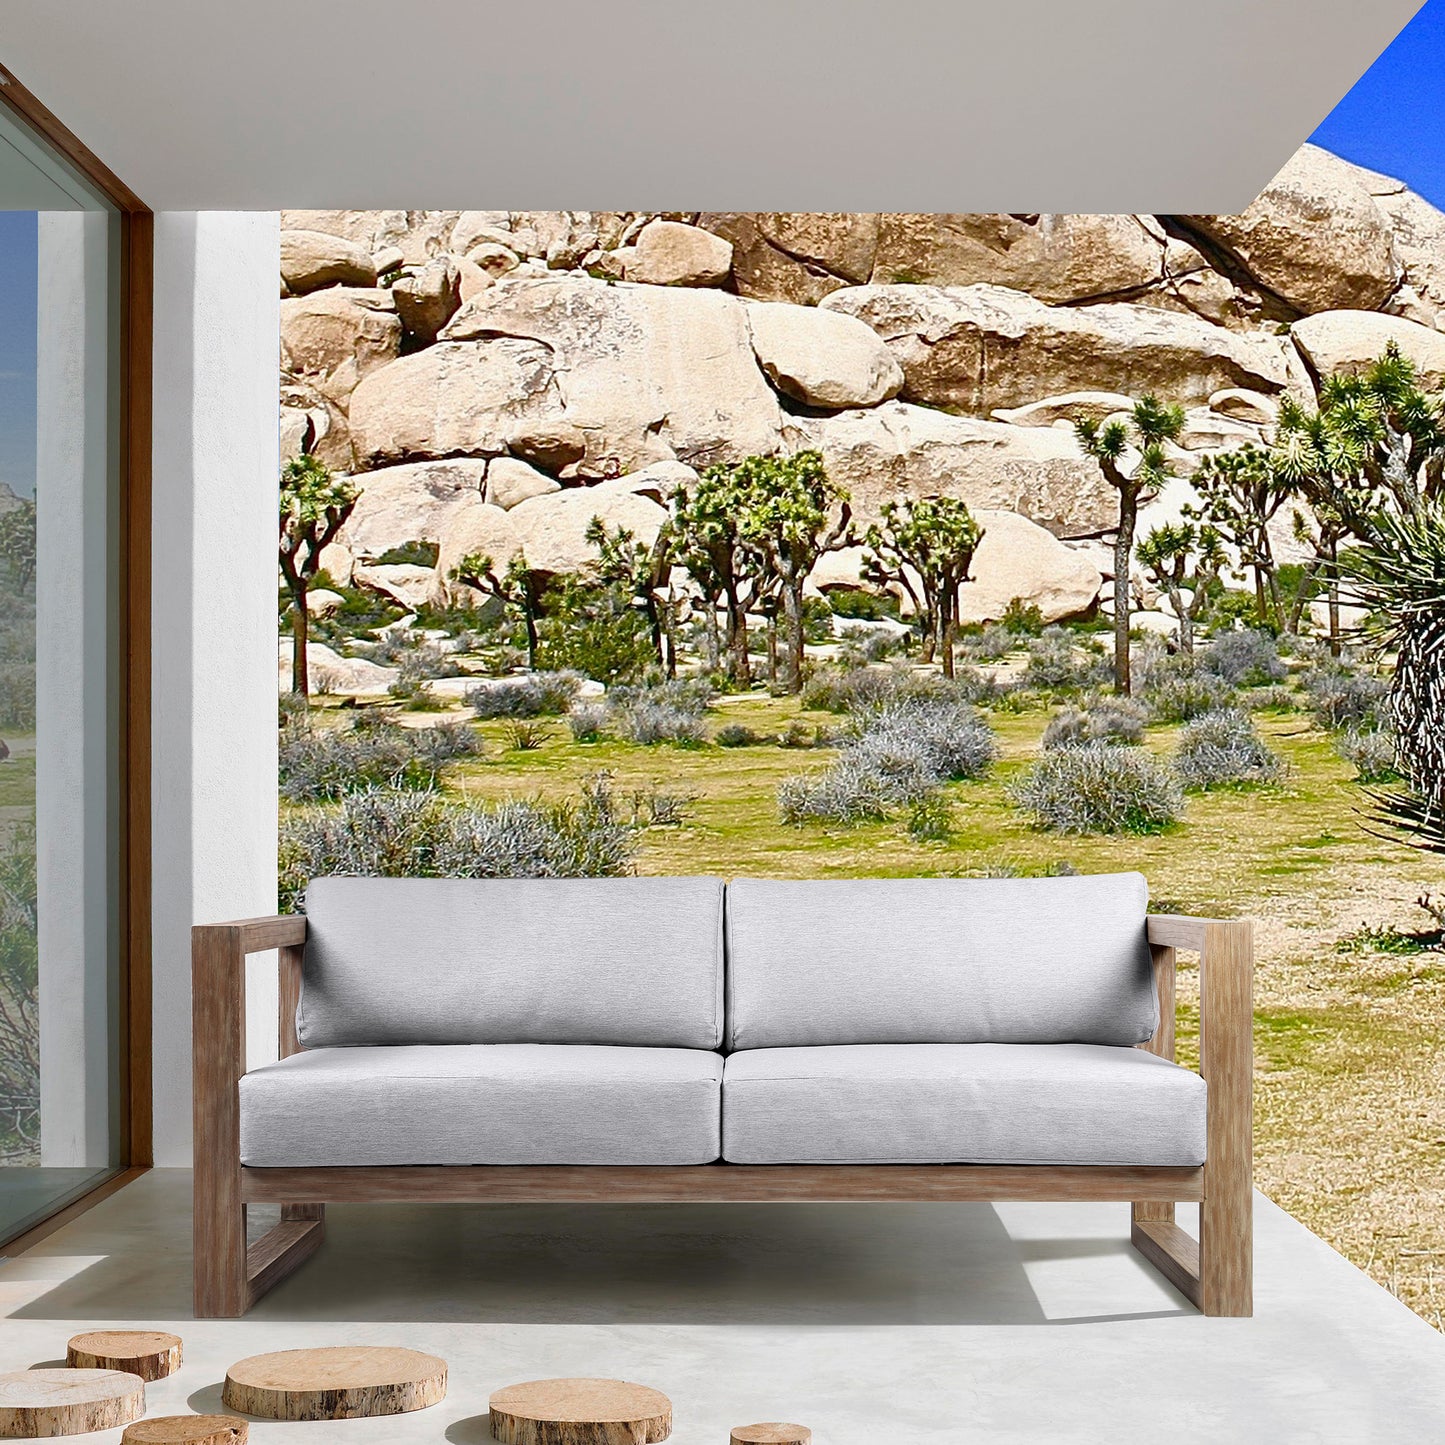 Paradise Outdoor Light Eucalyptus Wood Sofa with Gray Cushions